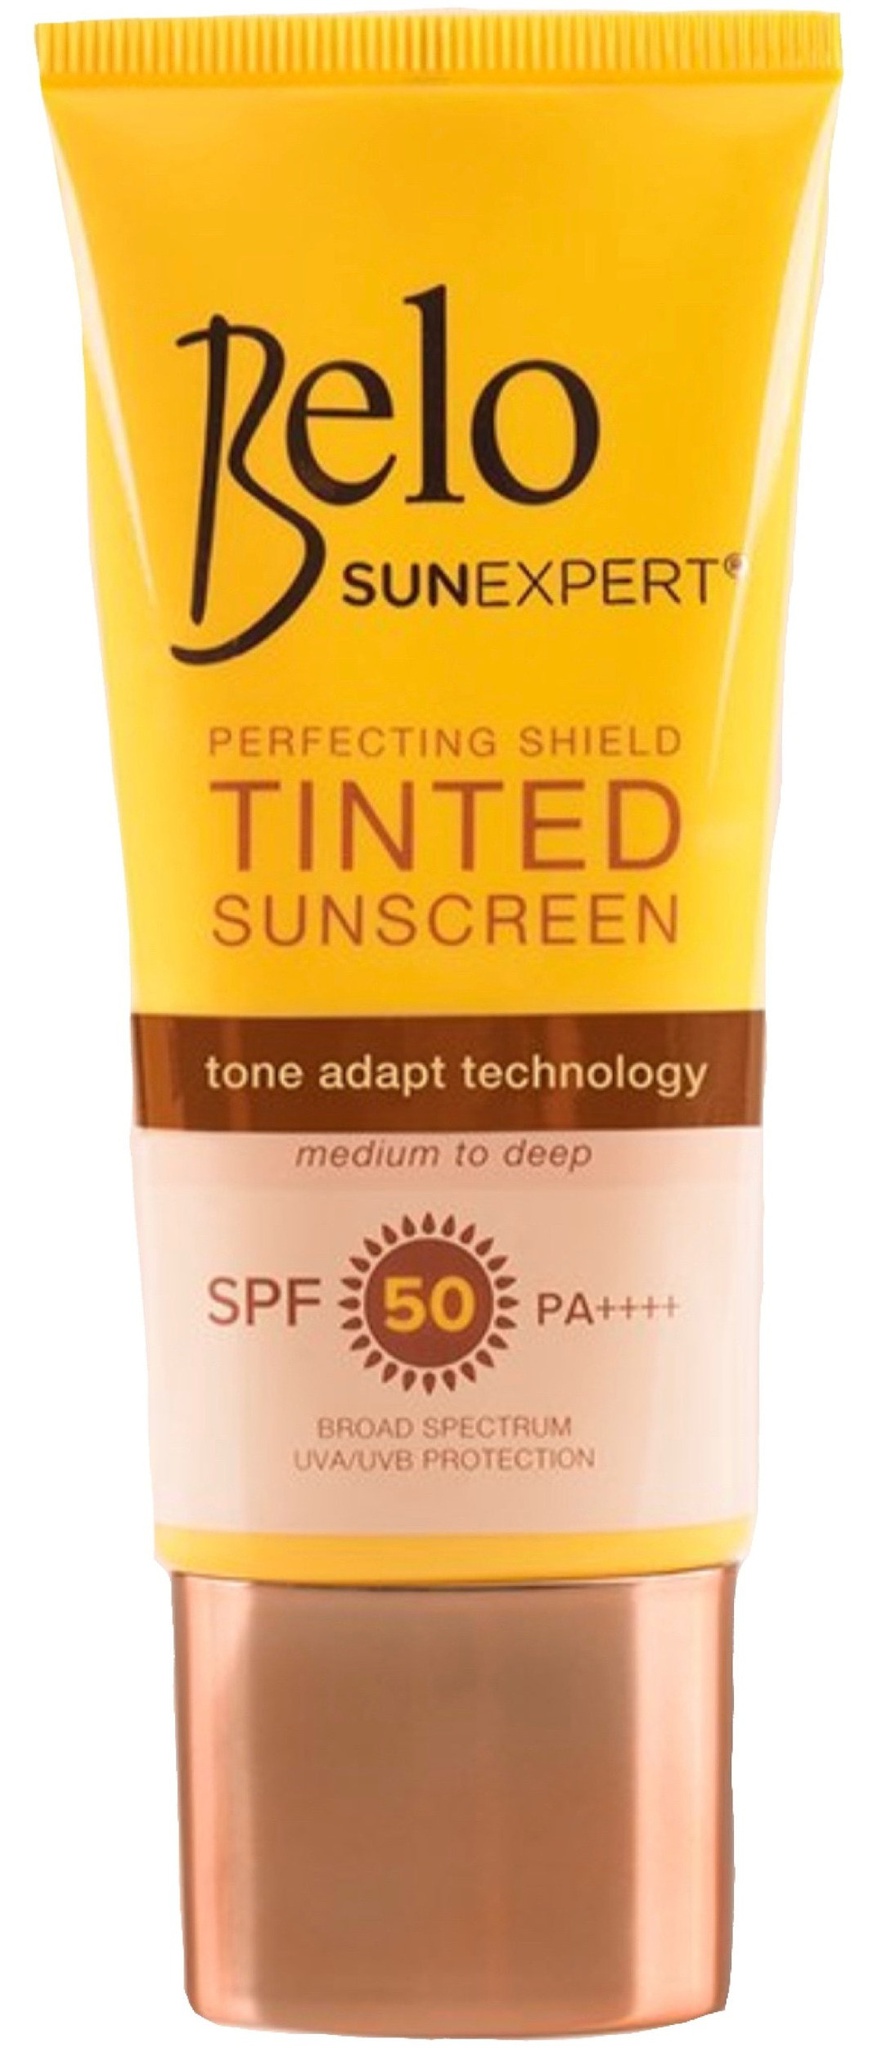 Belo SunExpert Perfecting Shield Tinted Sunscreen (2022)